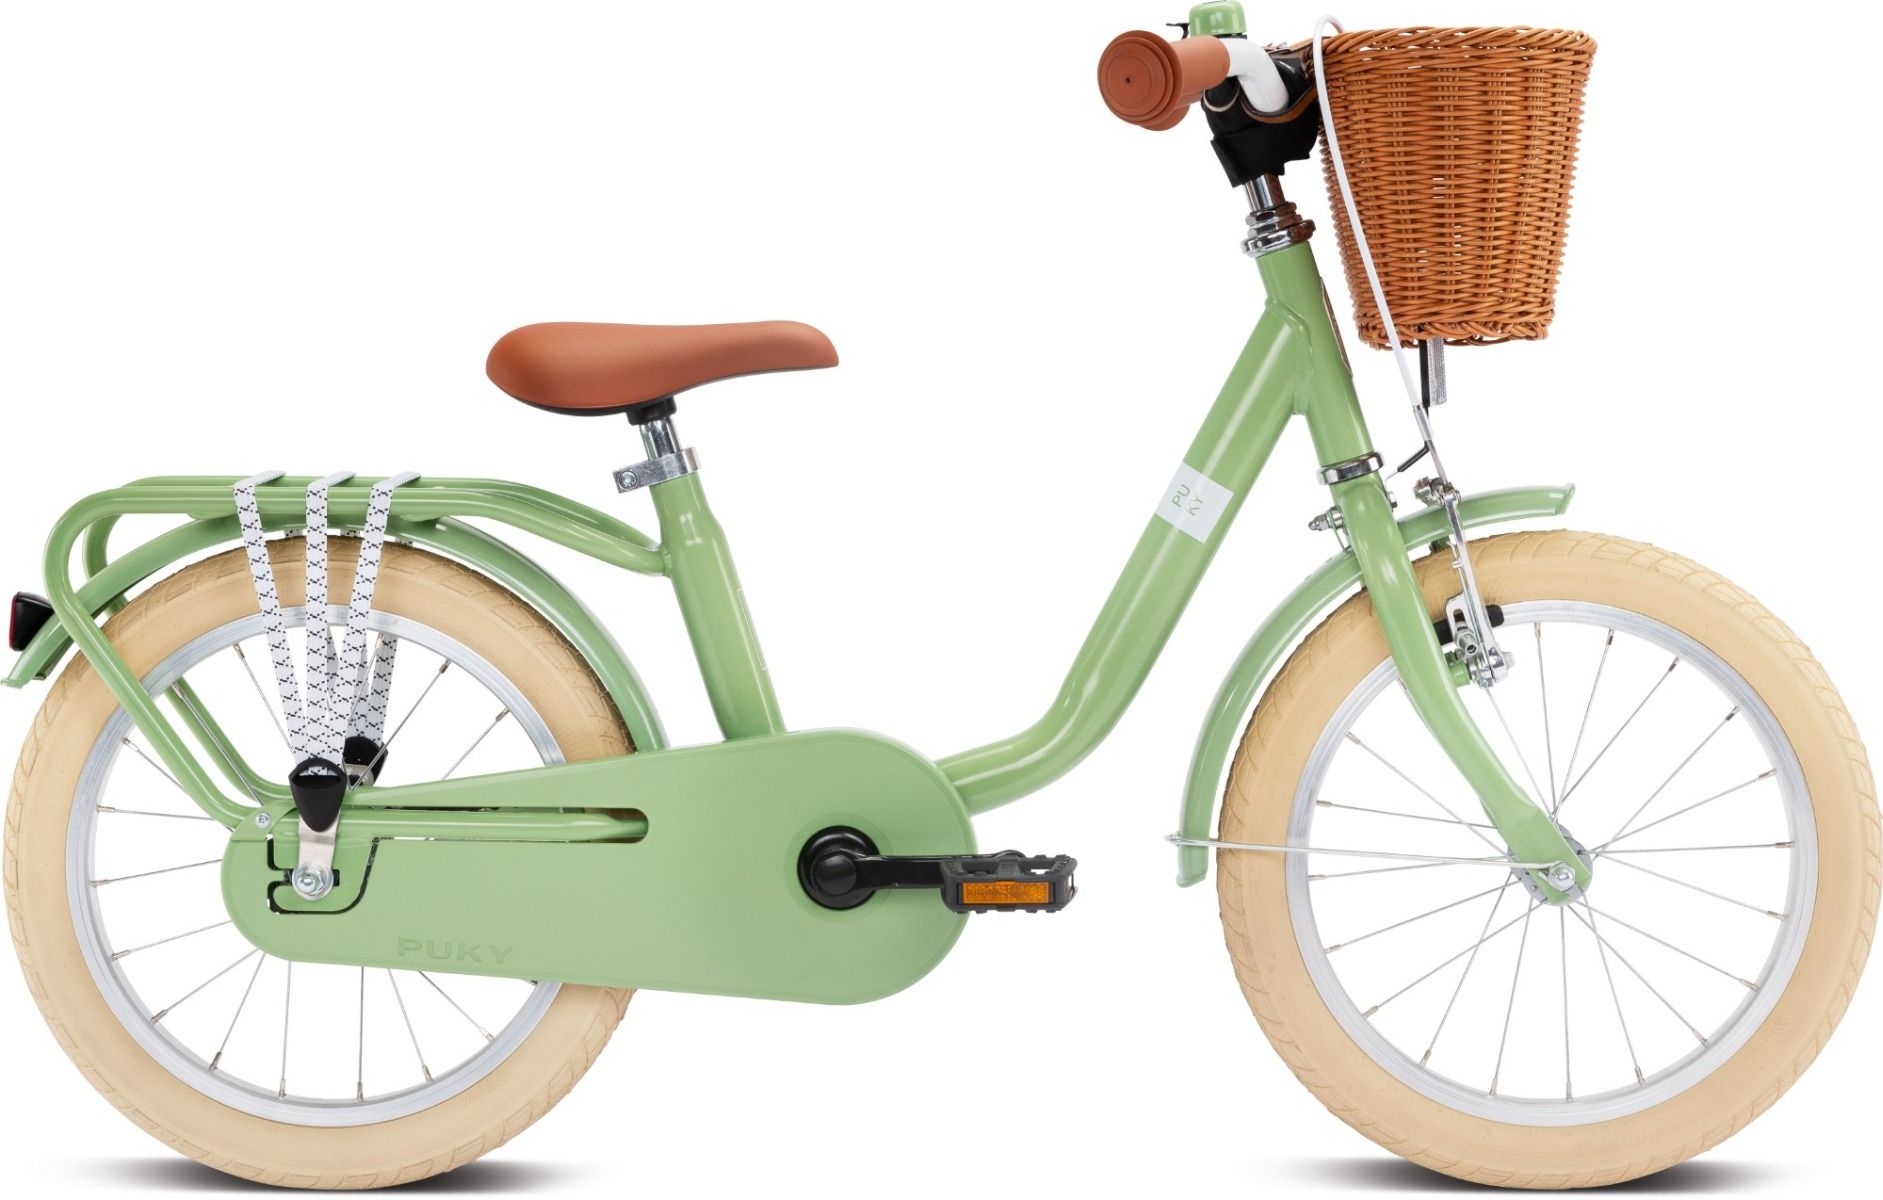 Puky STEEL CLASSIC 16 retro green - Fahrrad Online Shop